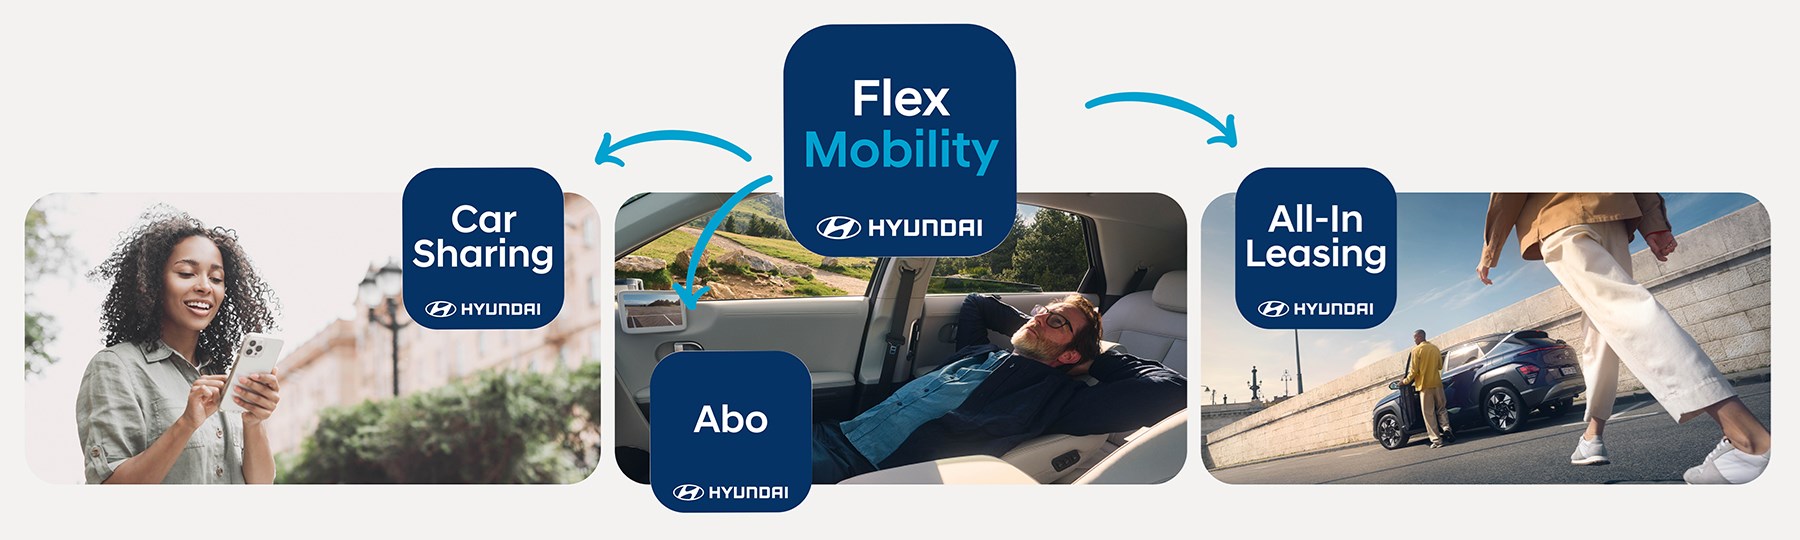 Hyundai-Flex Mobility Header-1800x540-11.23